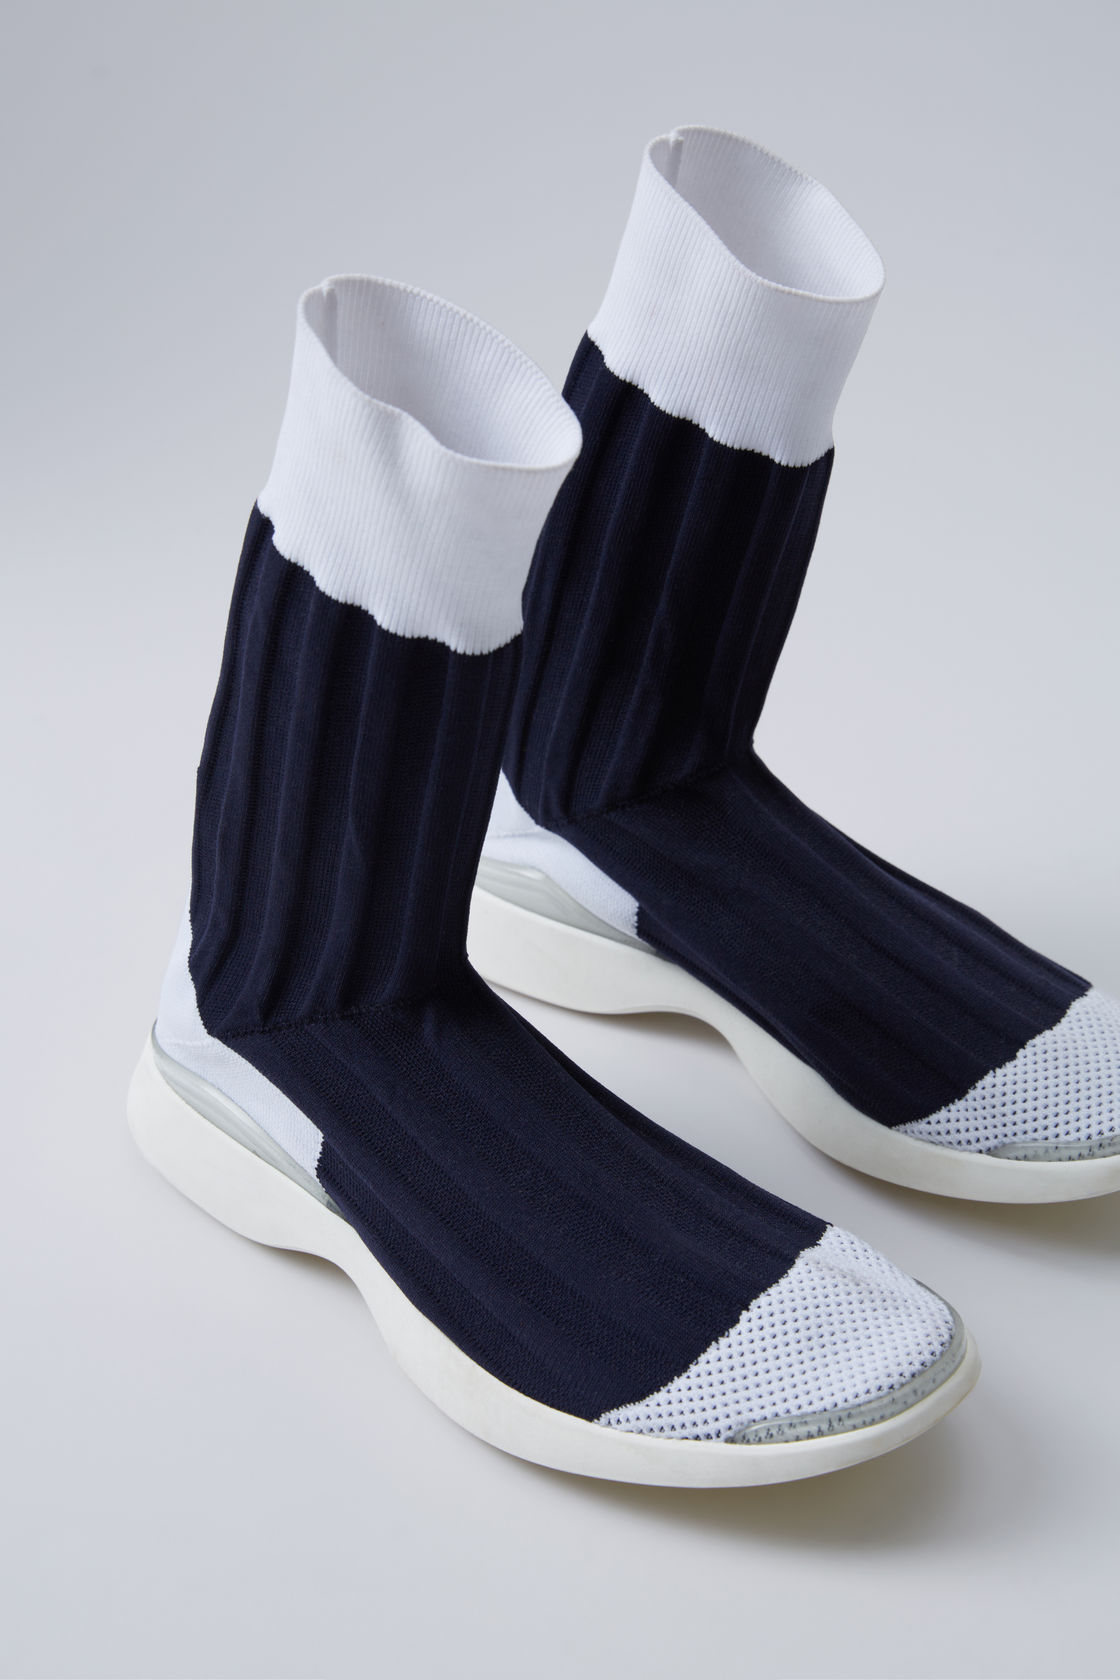 balenciagas that look like socks